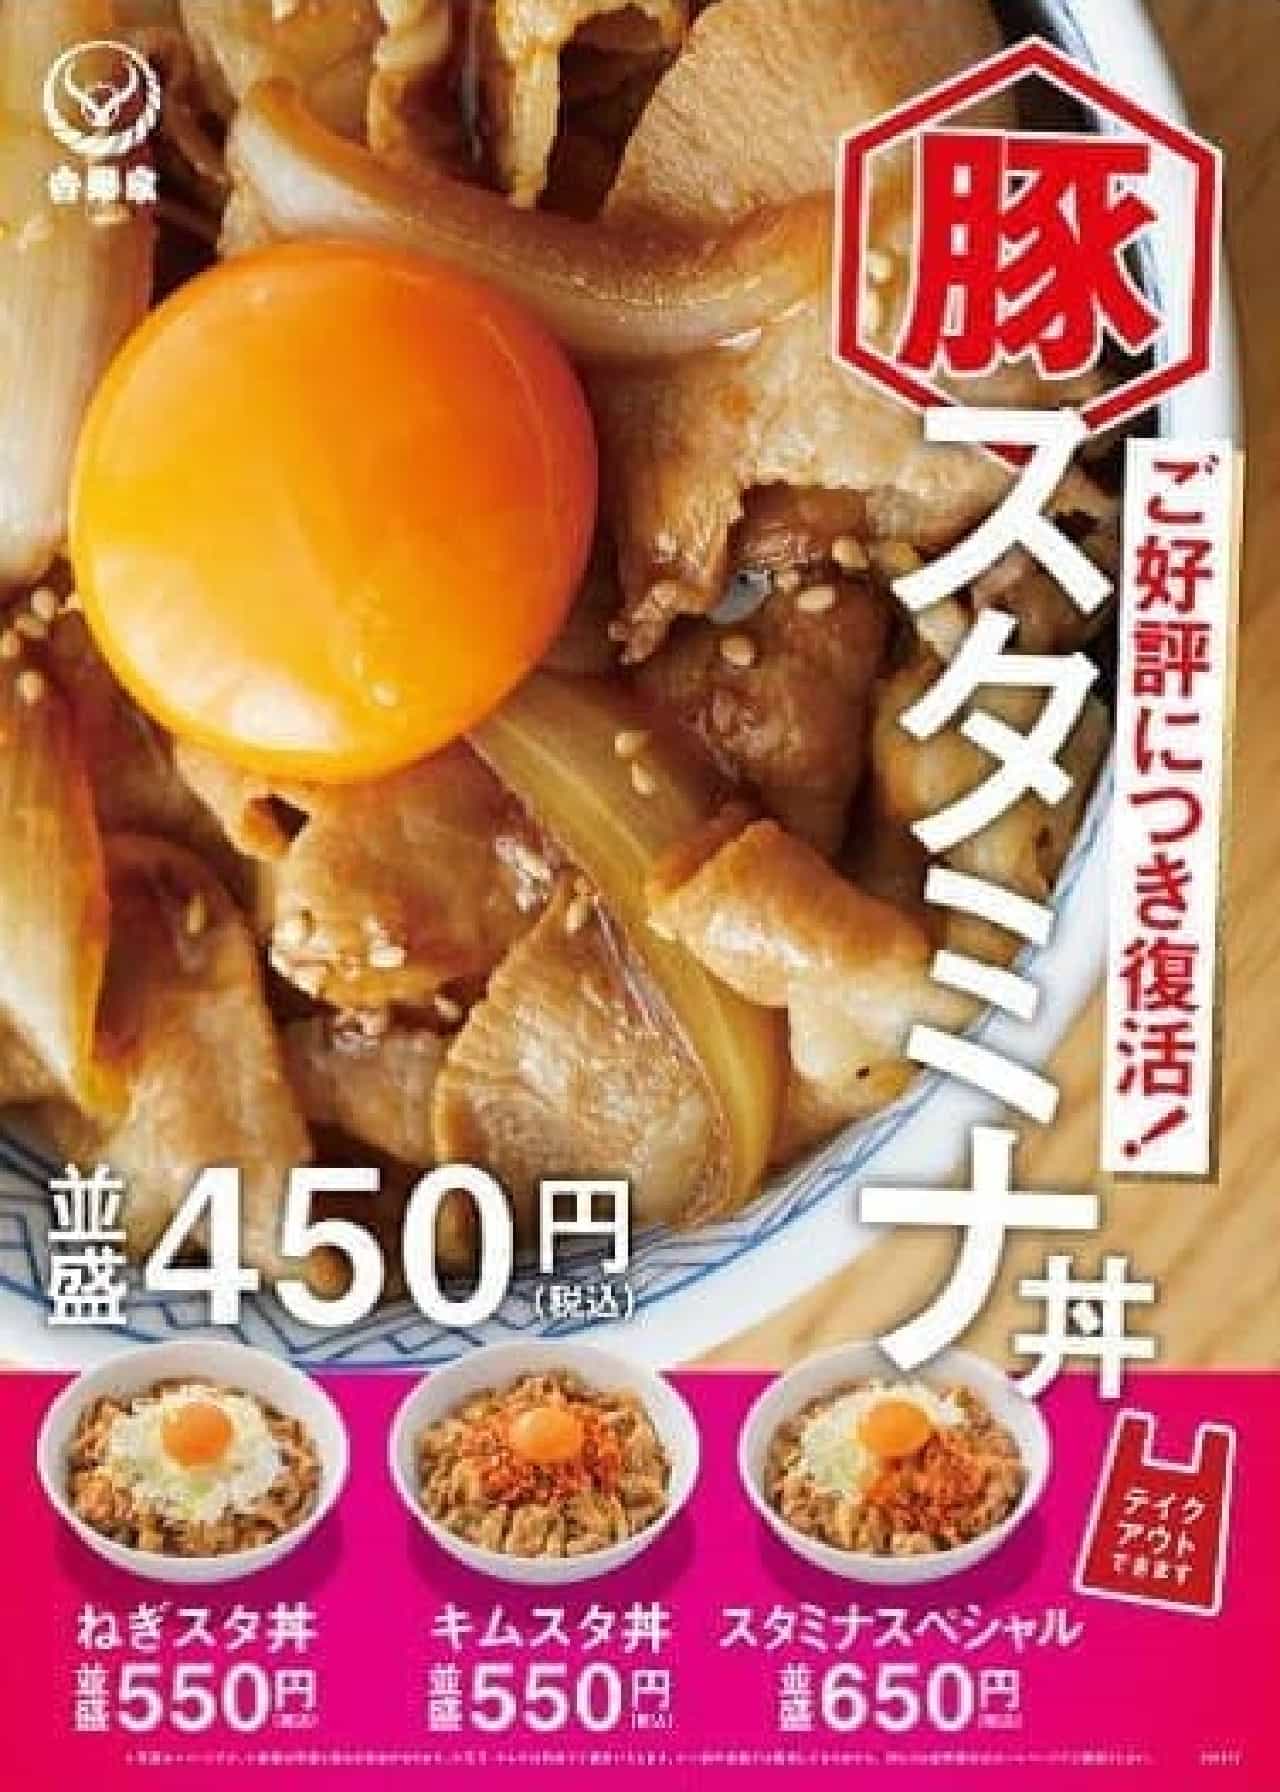 Yoshinoya "pork stamina bowl" reprint sale